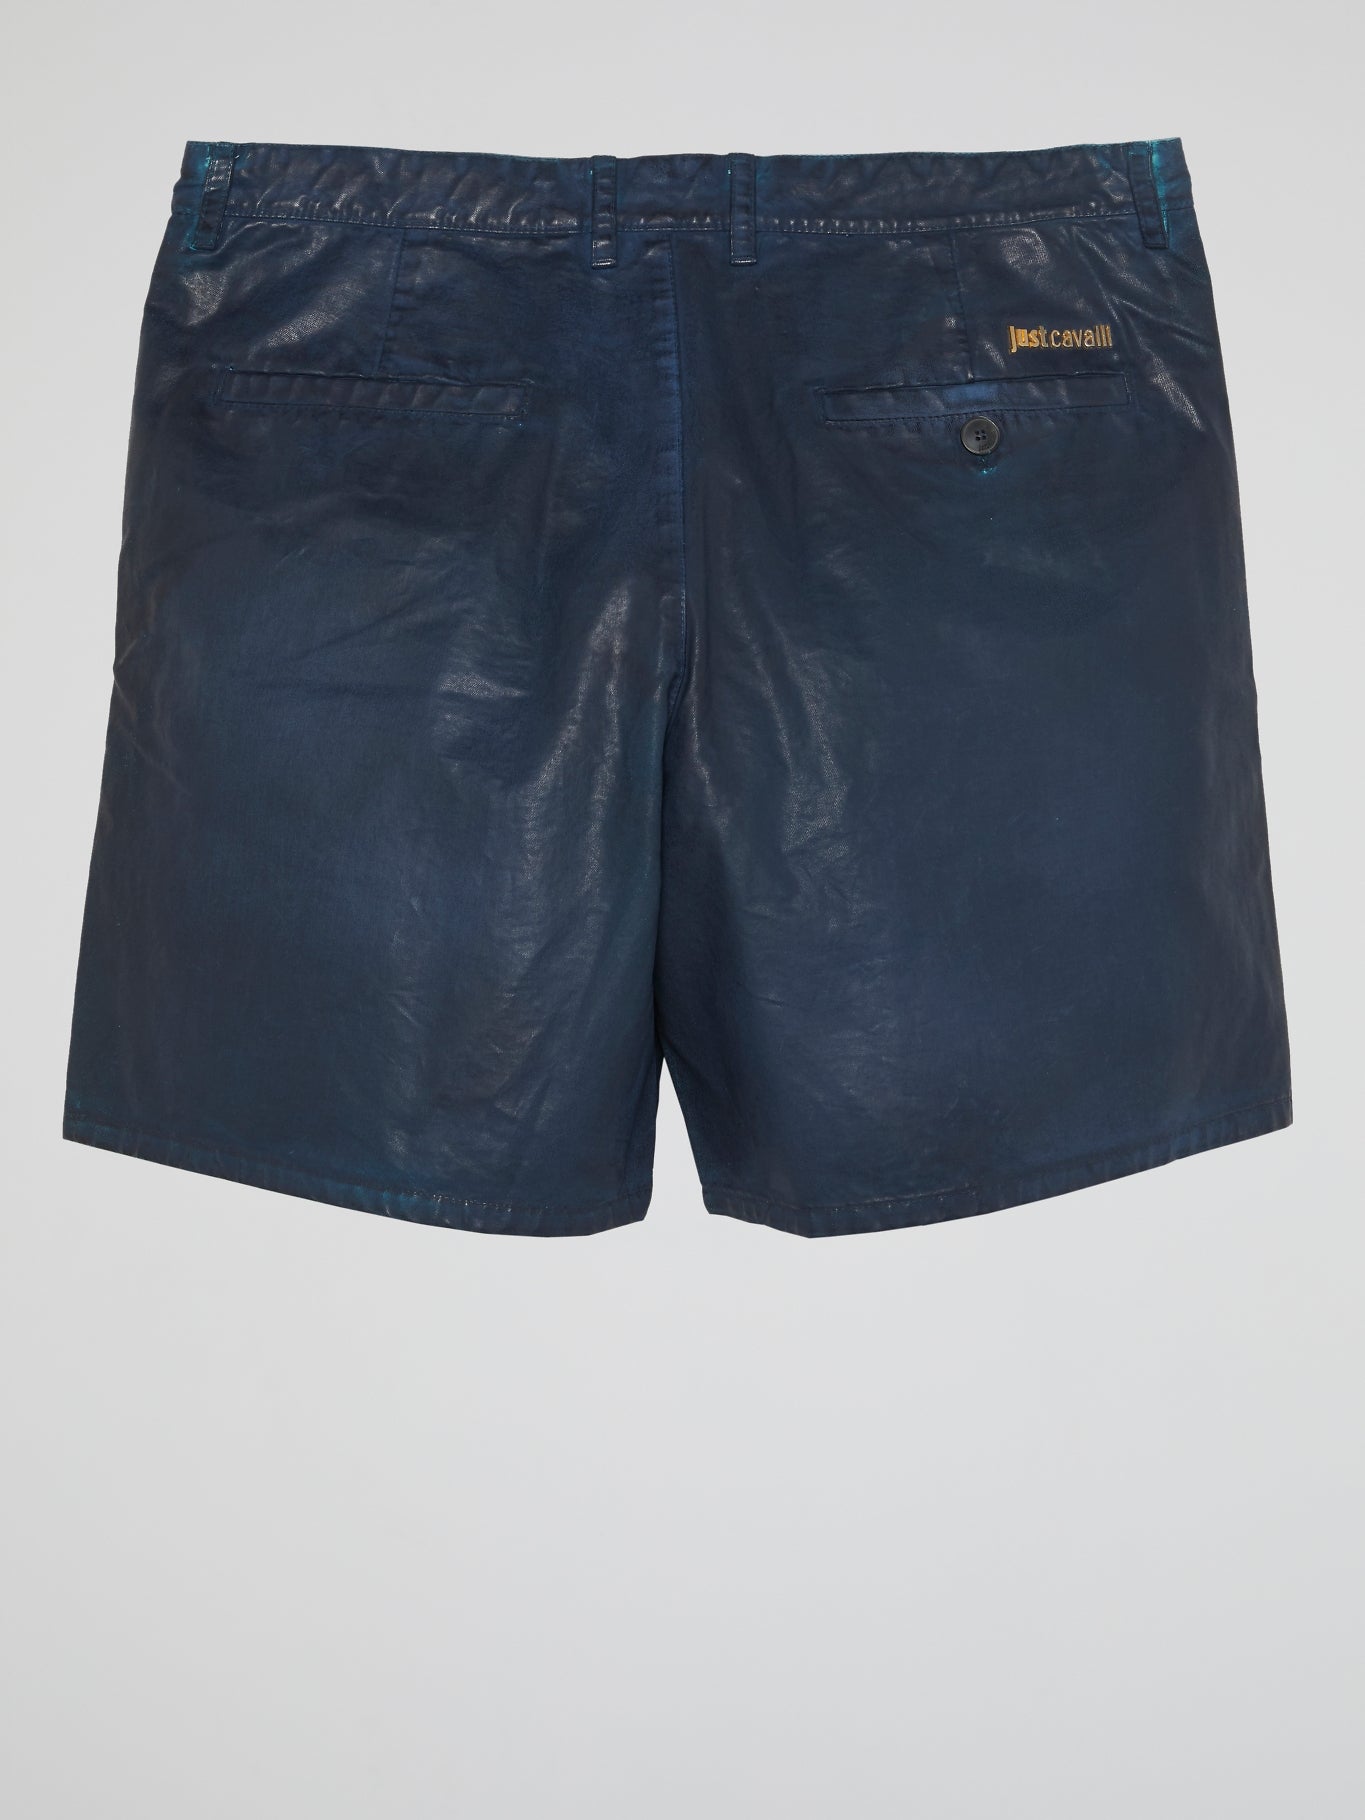 Navy Leather Shorts